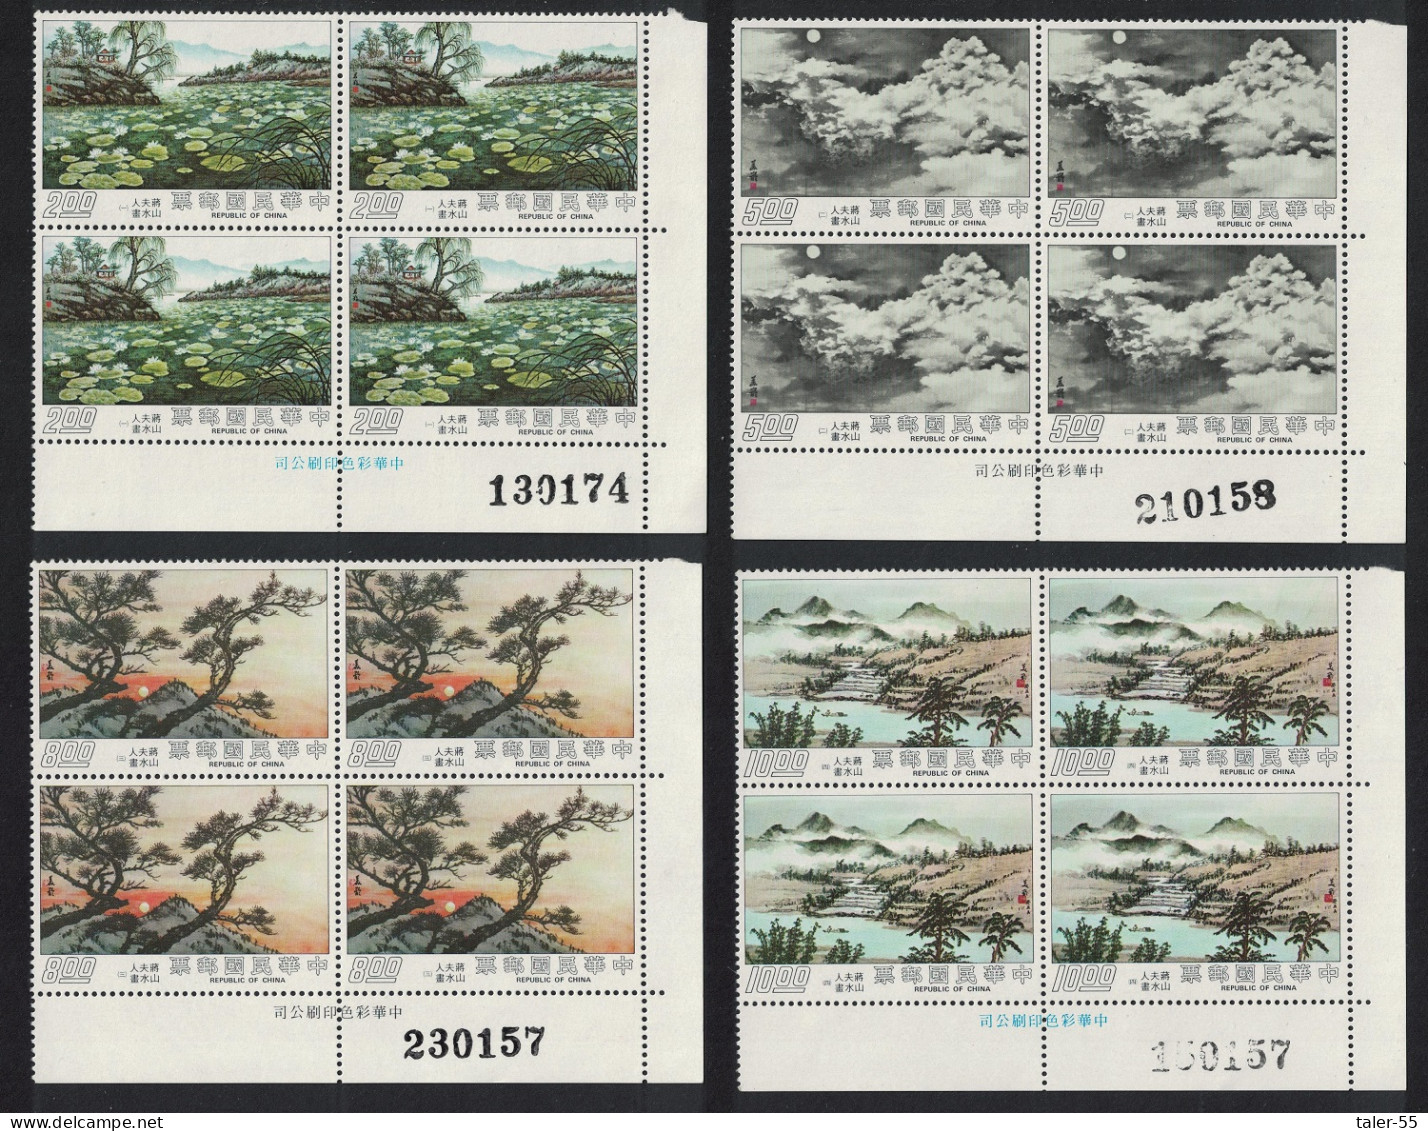 Taiwan Madame Chiang Kai-shek's Paintings 4v Corner Blocks Of 4 1975 MNH SG#1078-1081 - Unused Stamps